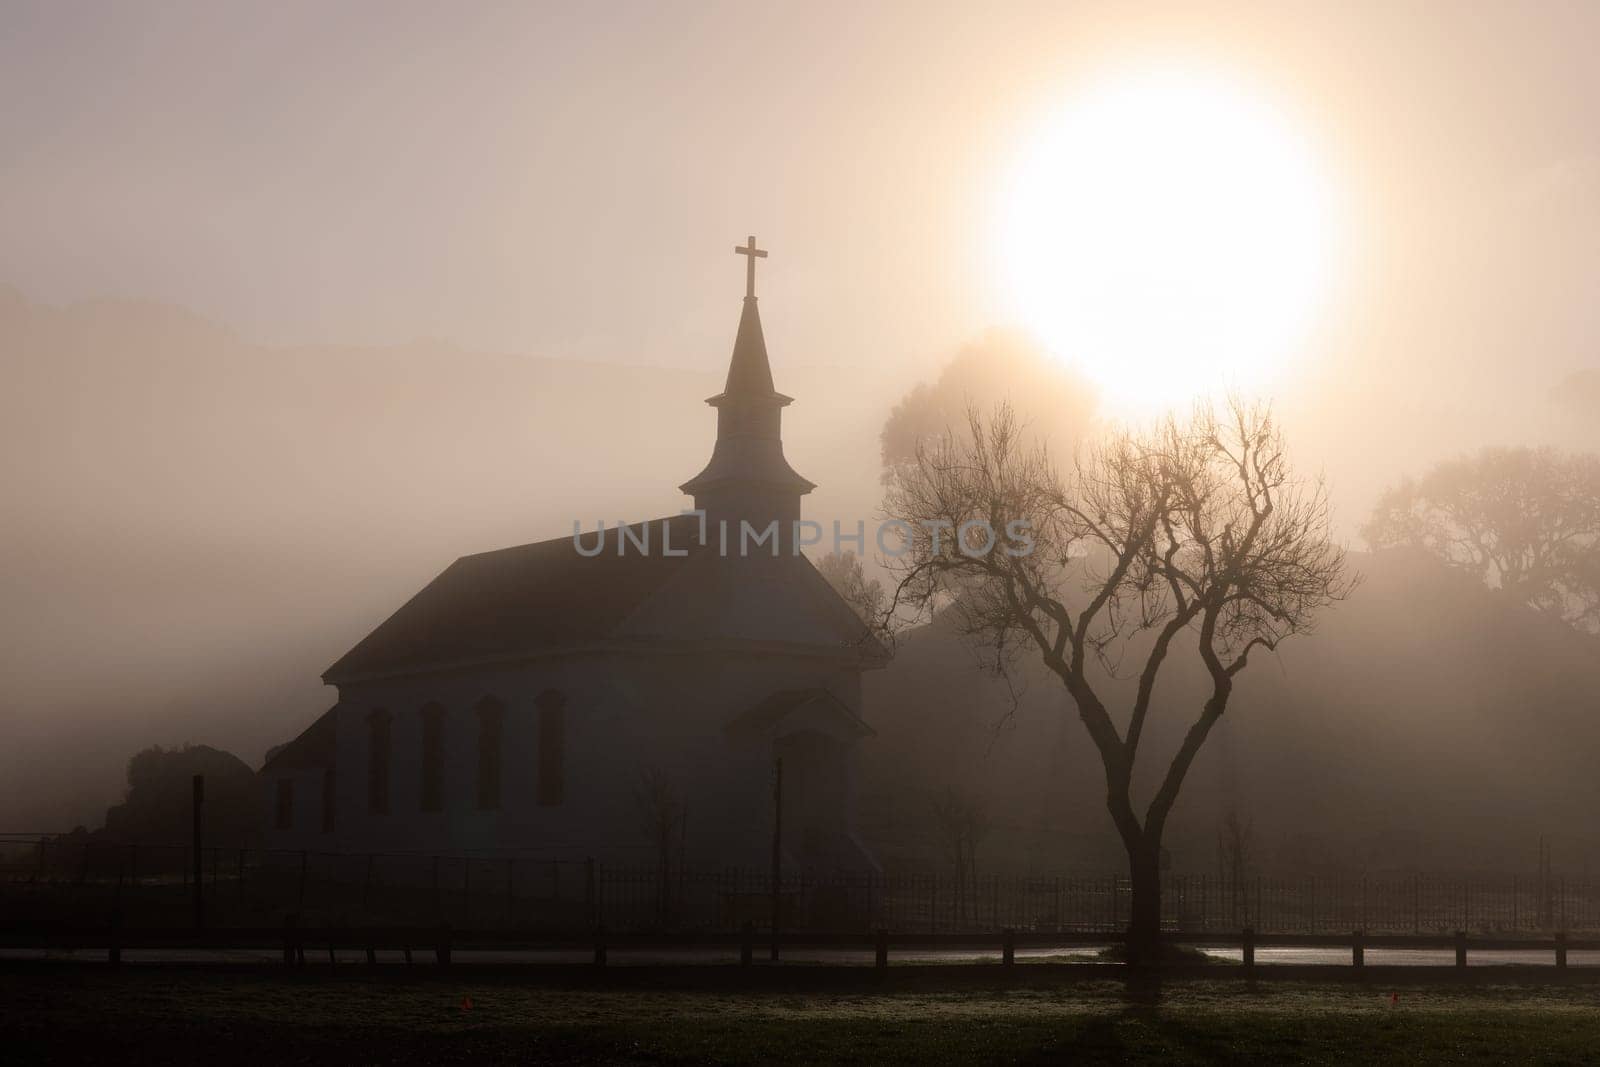 Brilliant bright sun silhouettes small church and tree in fog at dawn by Osaze